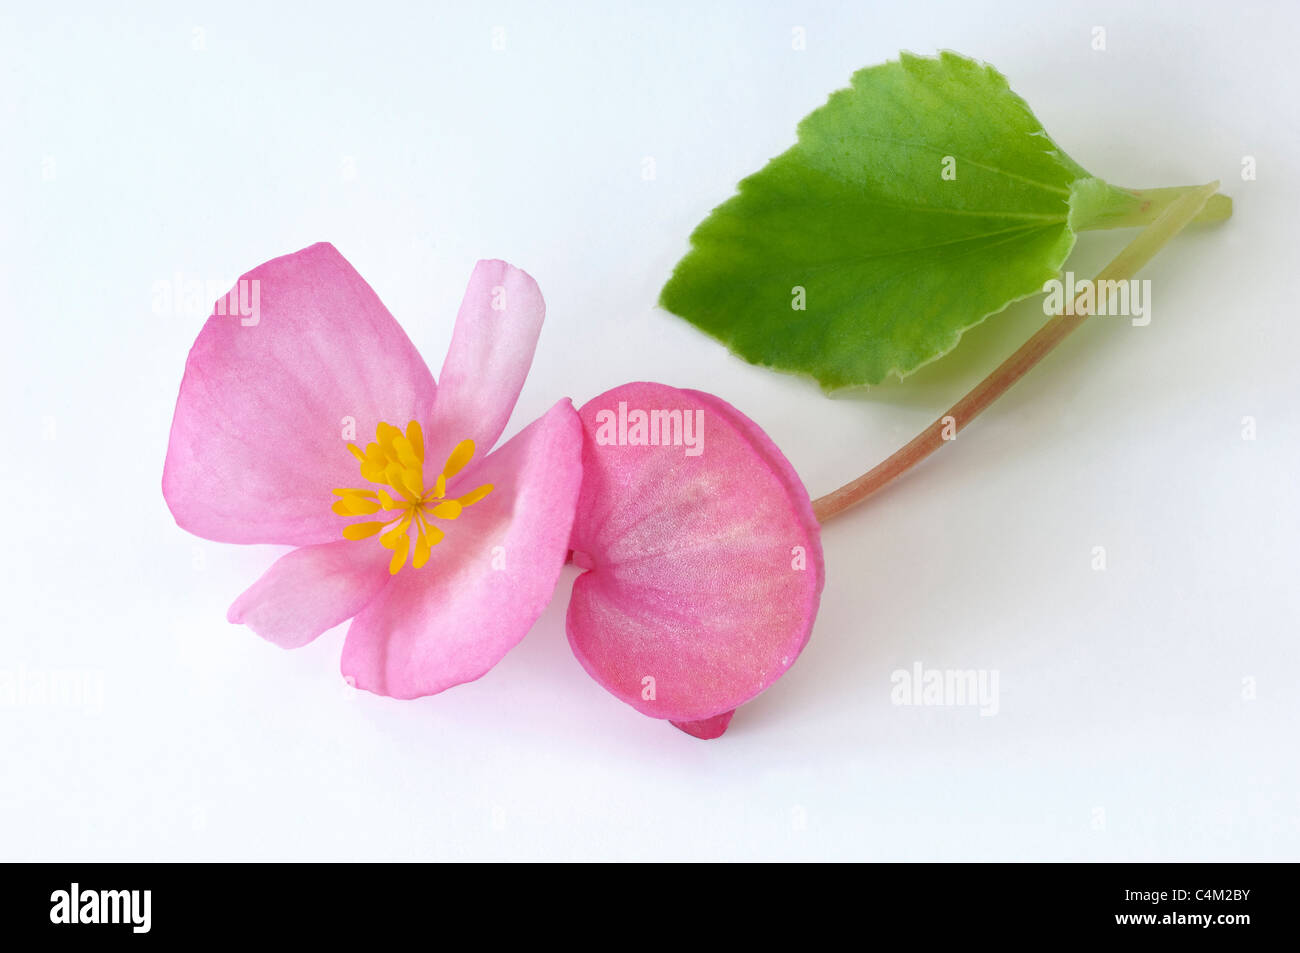 Wax Begonia, Wax-leaf Begonia (Begonia x semperfloren-cultorum), pink flower and leaf. Stock Photo